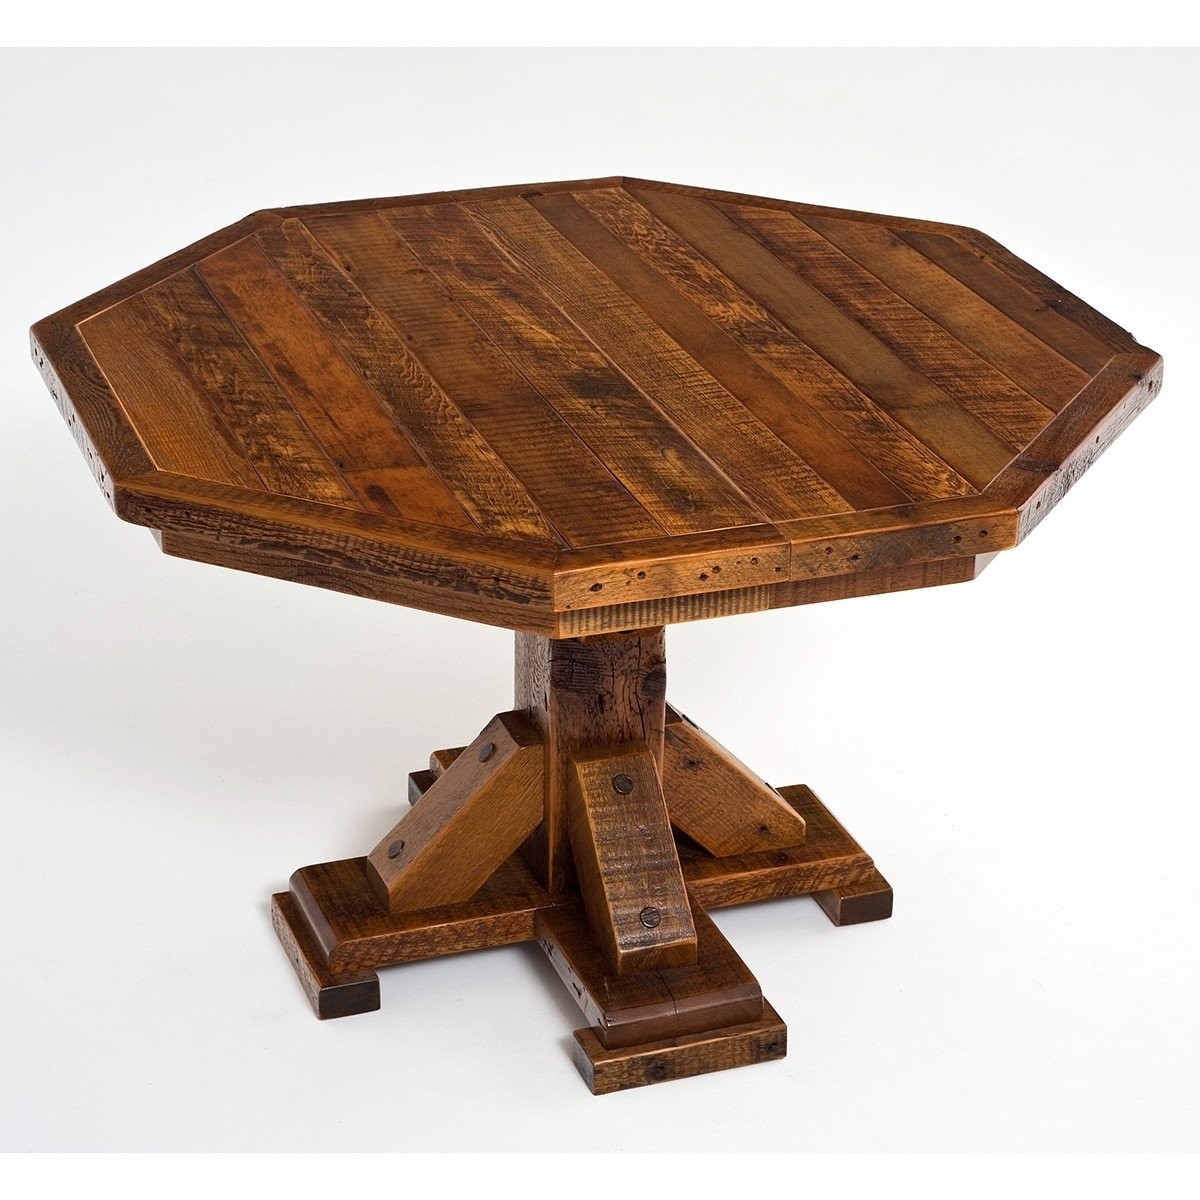 Barnwood furniture rustic furnishings log bed cabin decor harvest tables